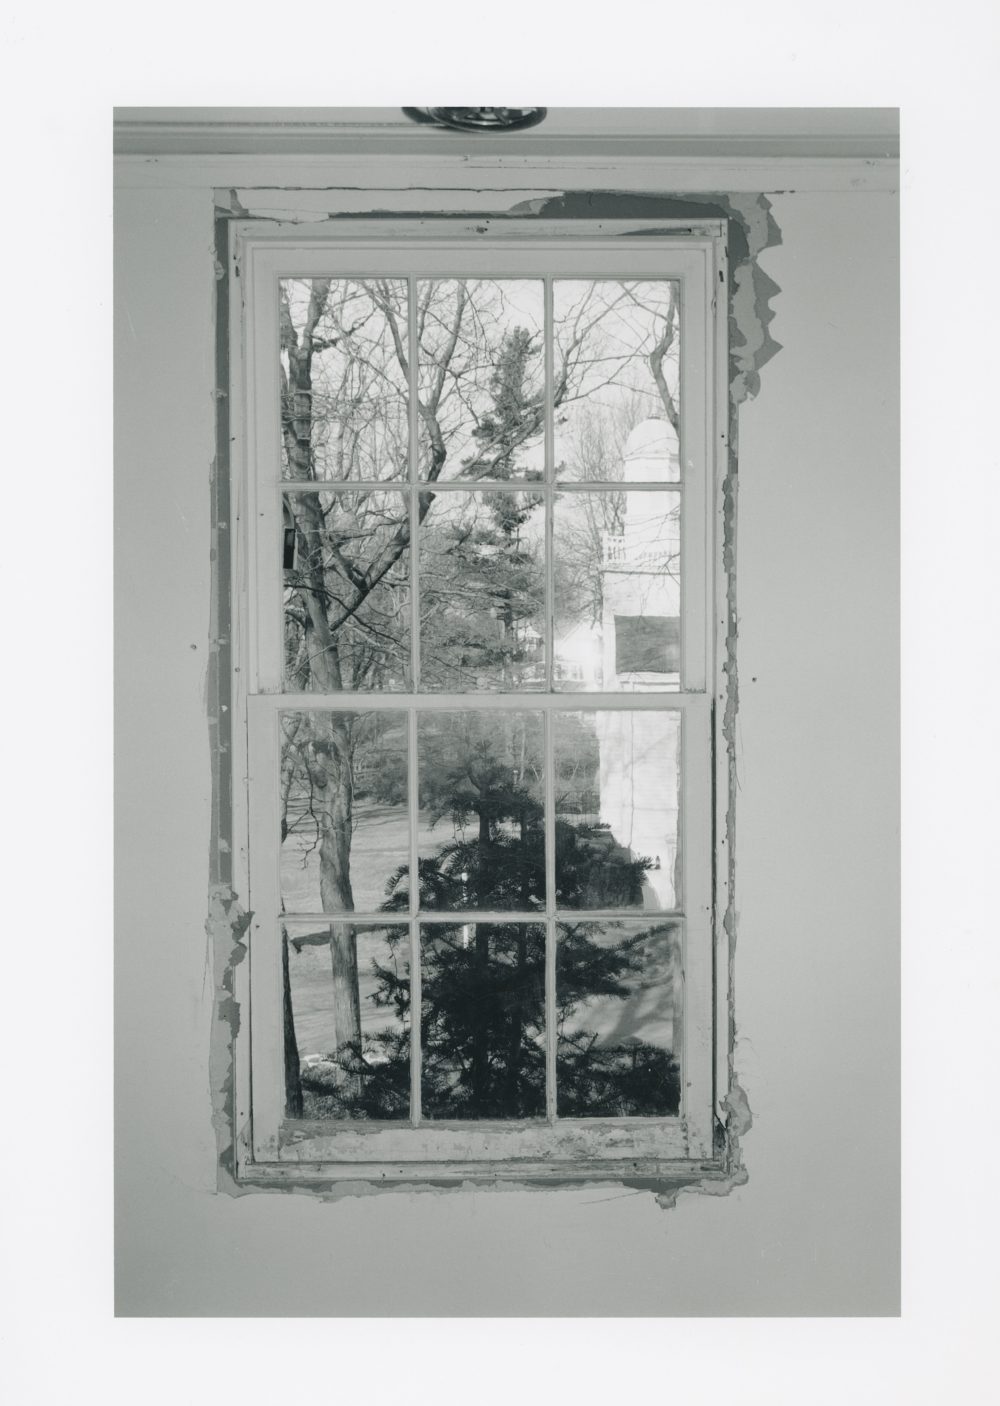 A revealed window inside The Aldrich by Ann Hamilton